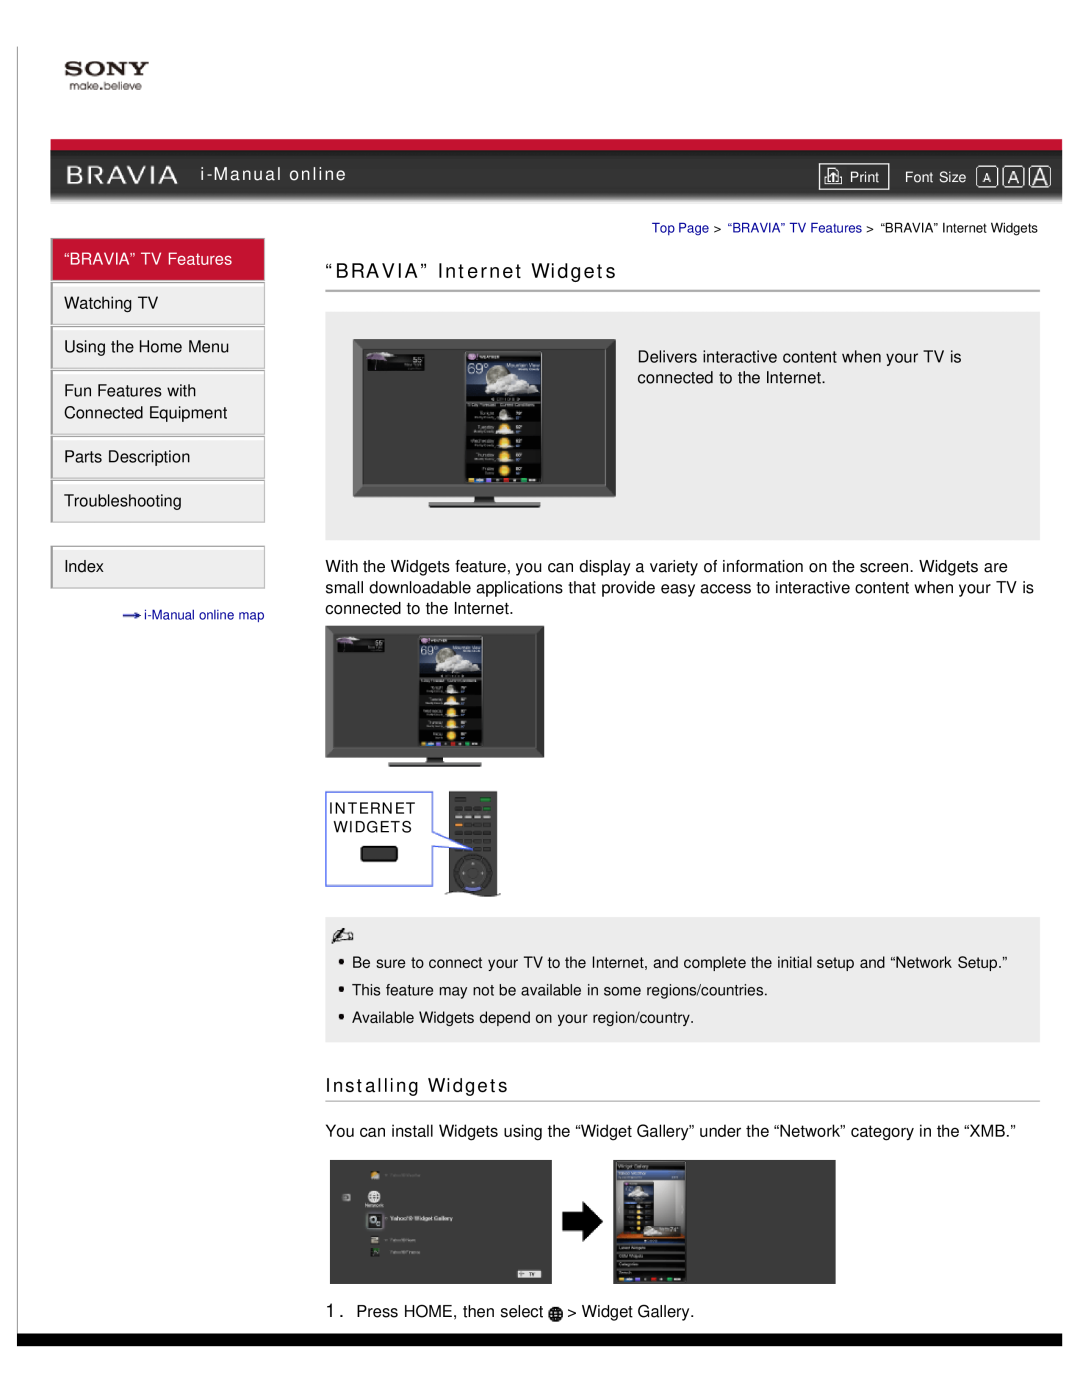 Sony NX80X manual “BRAVIA” Internet Widgets, Installing Widgets, i-Manual online, “BRAVIA” TV Features, Watching TV 